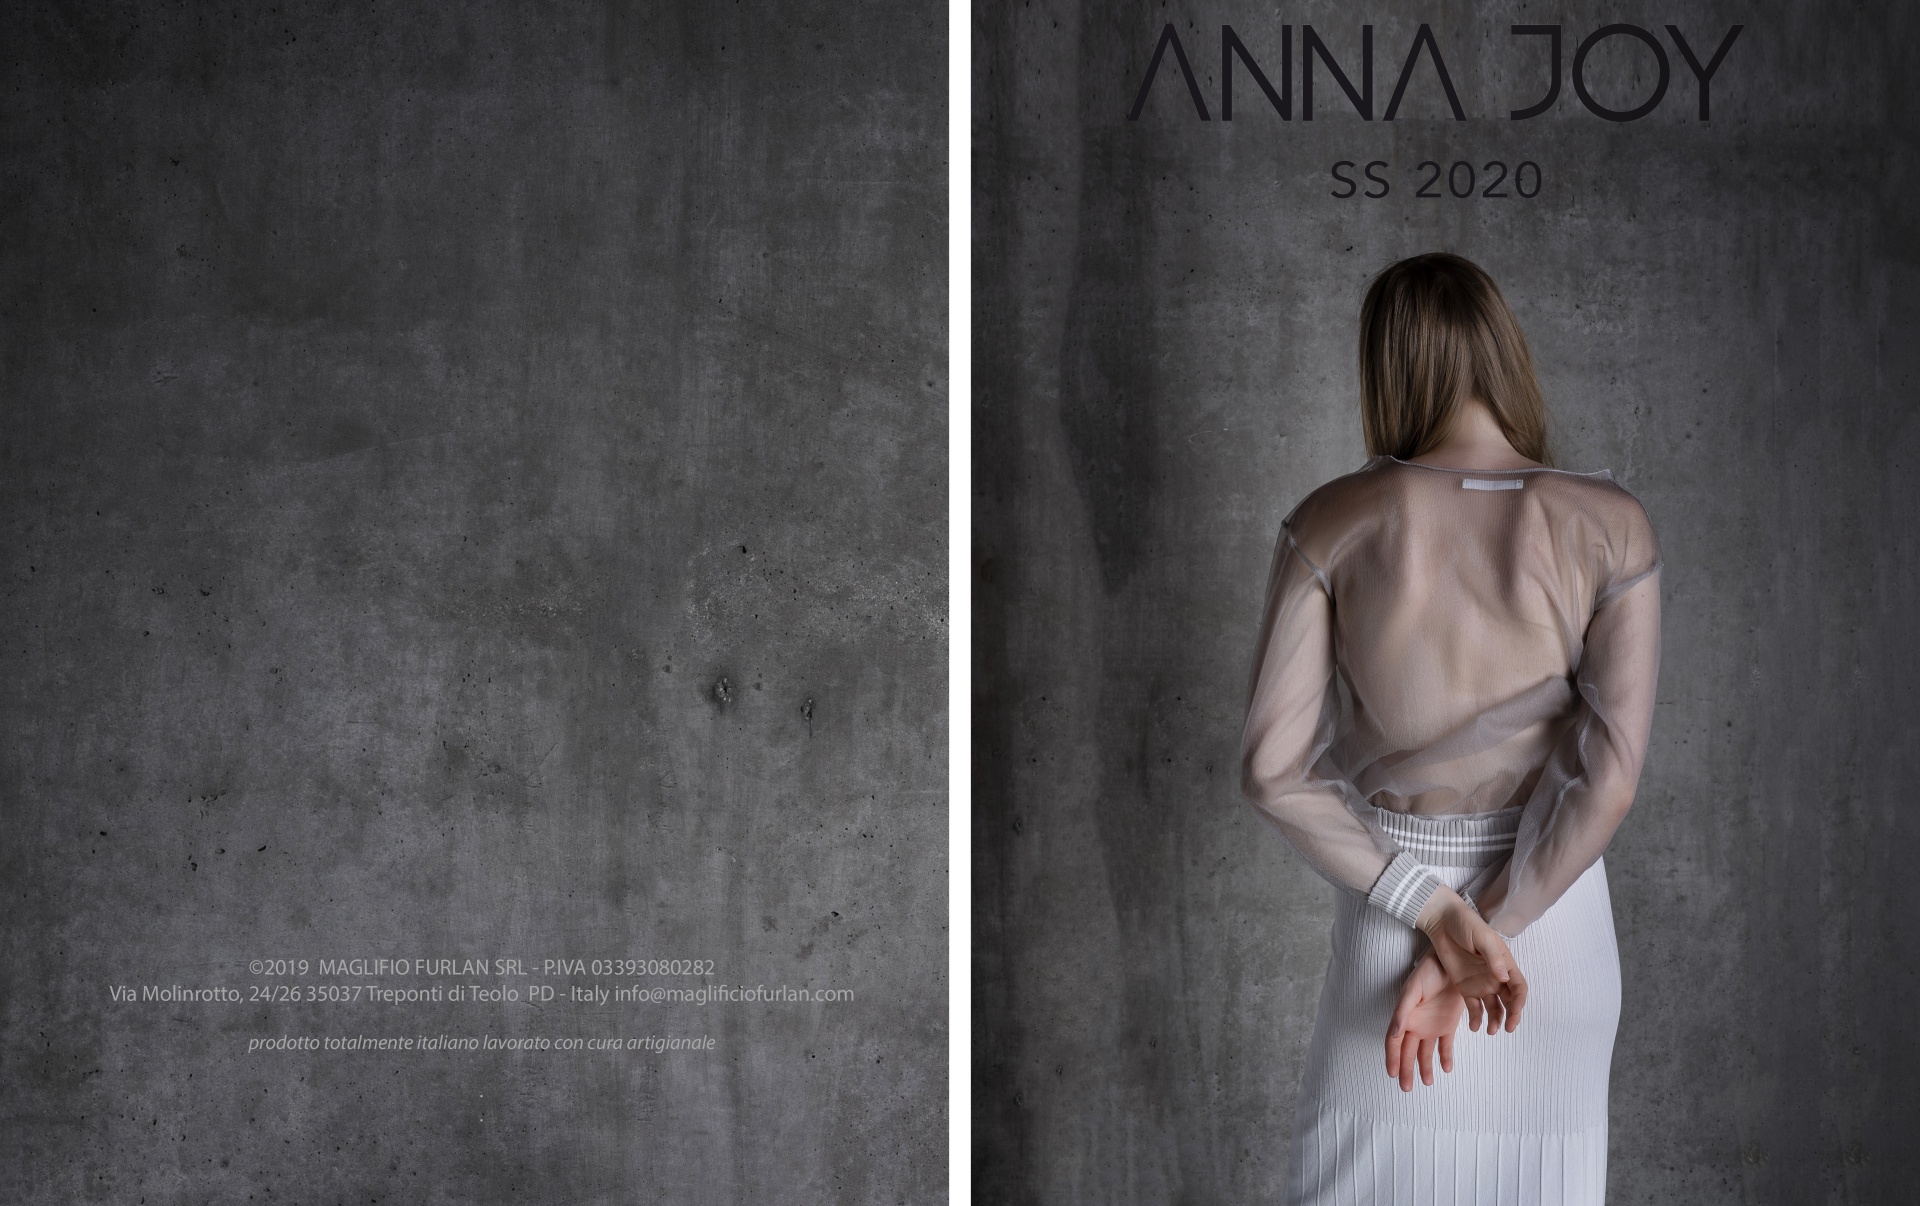 ANNA JOY SS 2020, lookbook fotografico brand ANNA JOY